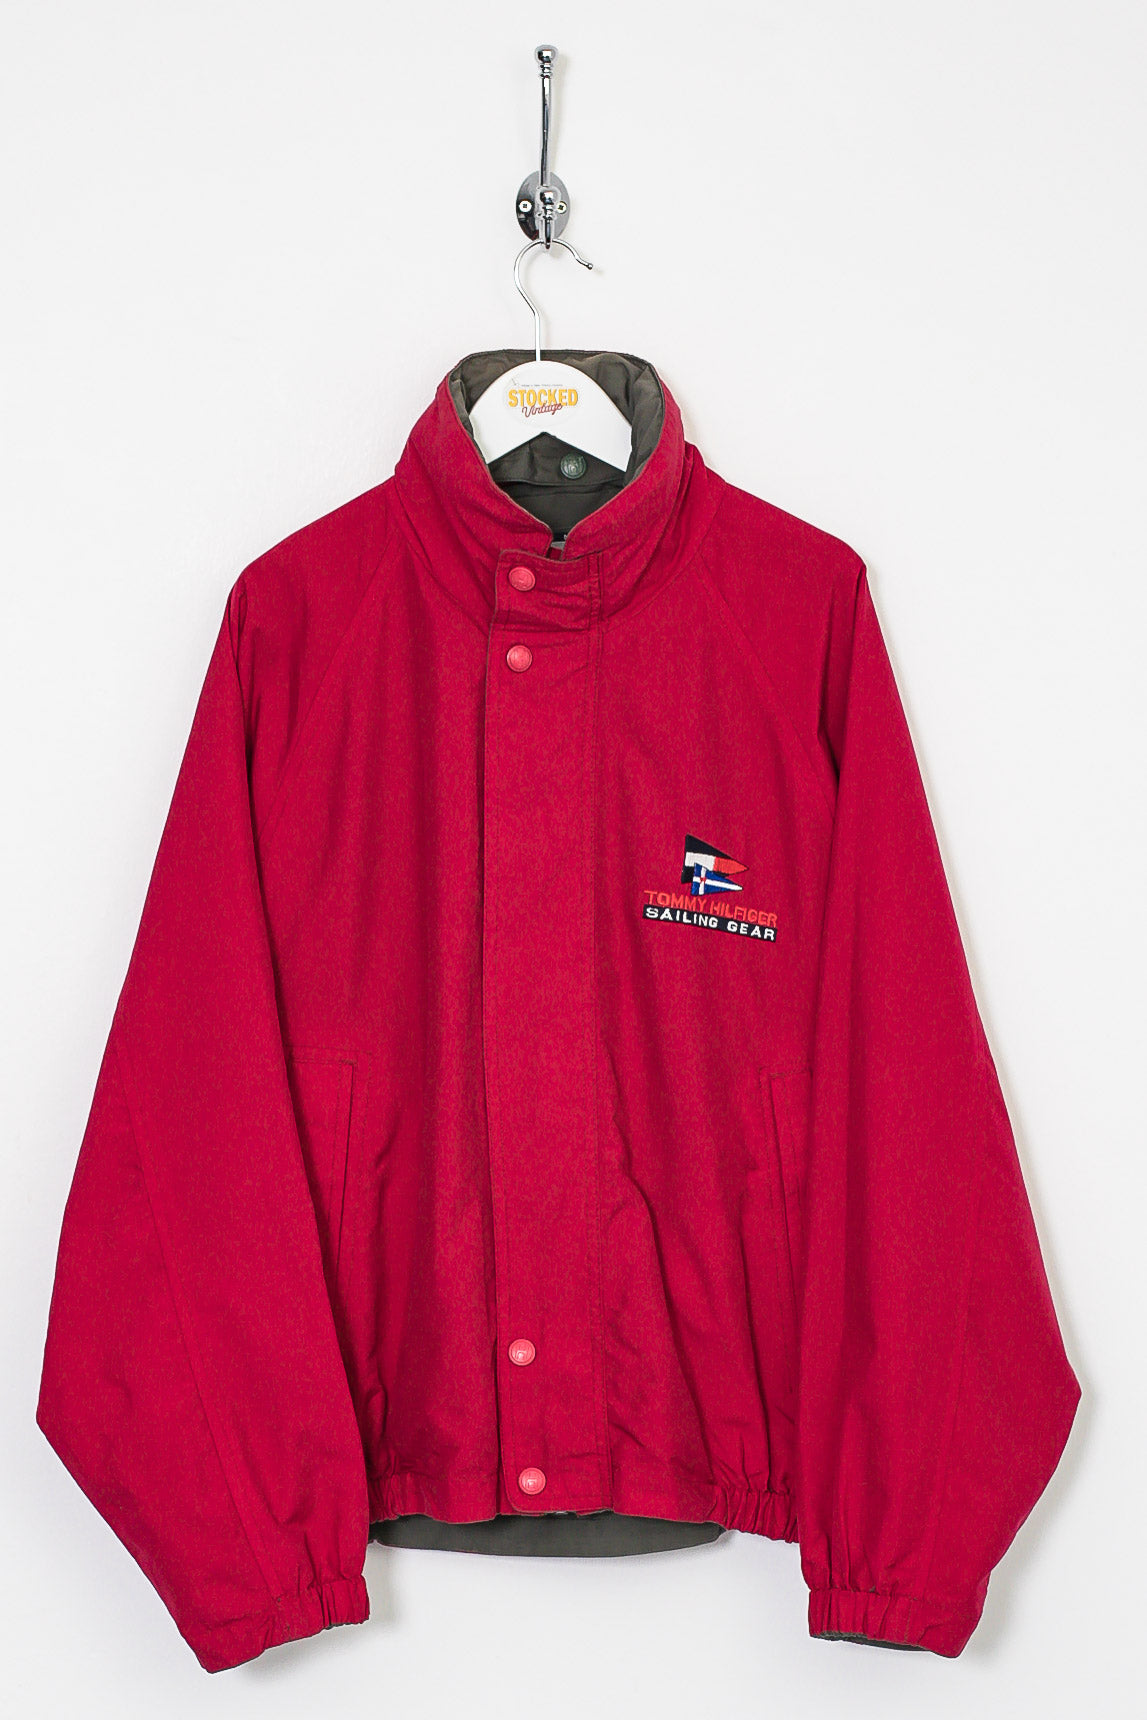 90s Tommy Hilfiger Reversible Jacket (M)